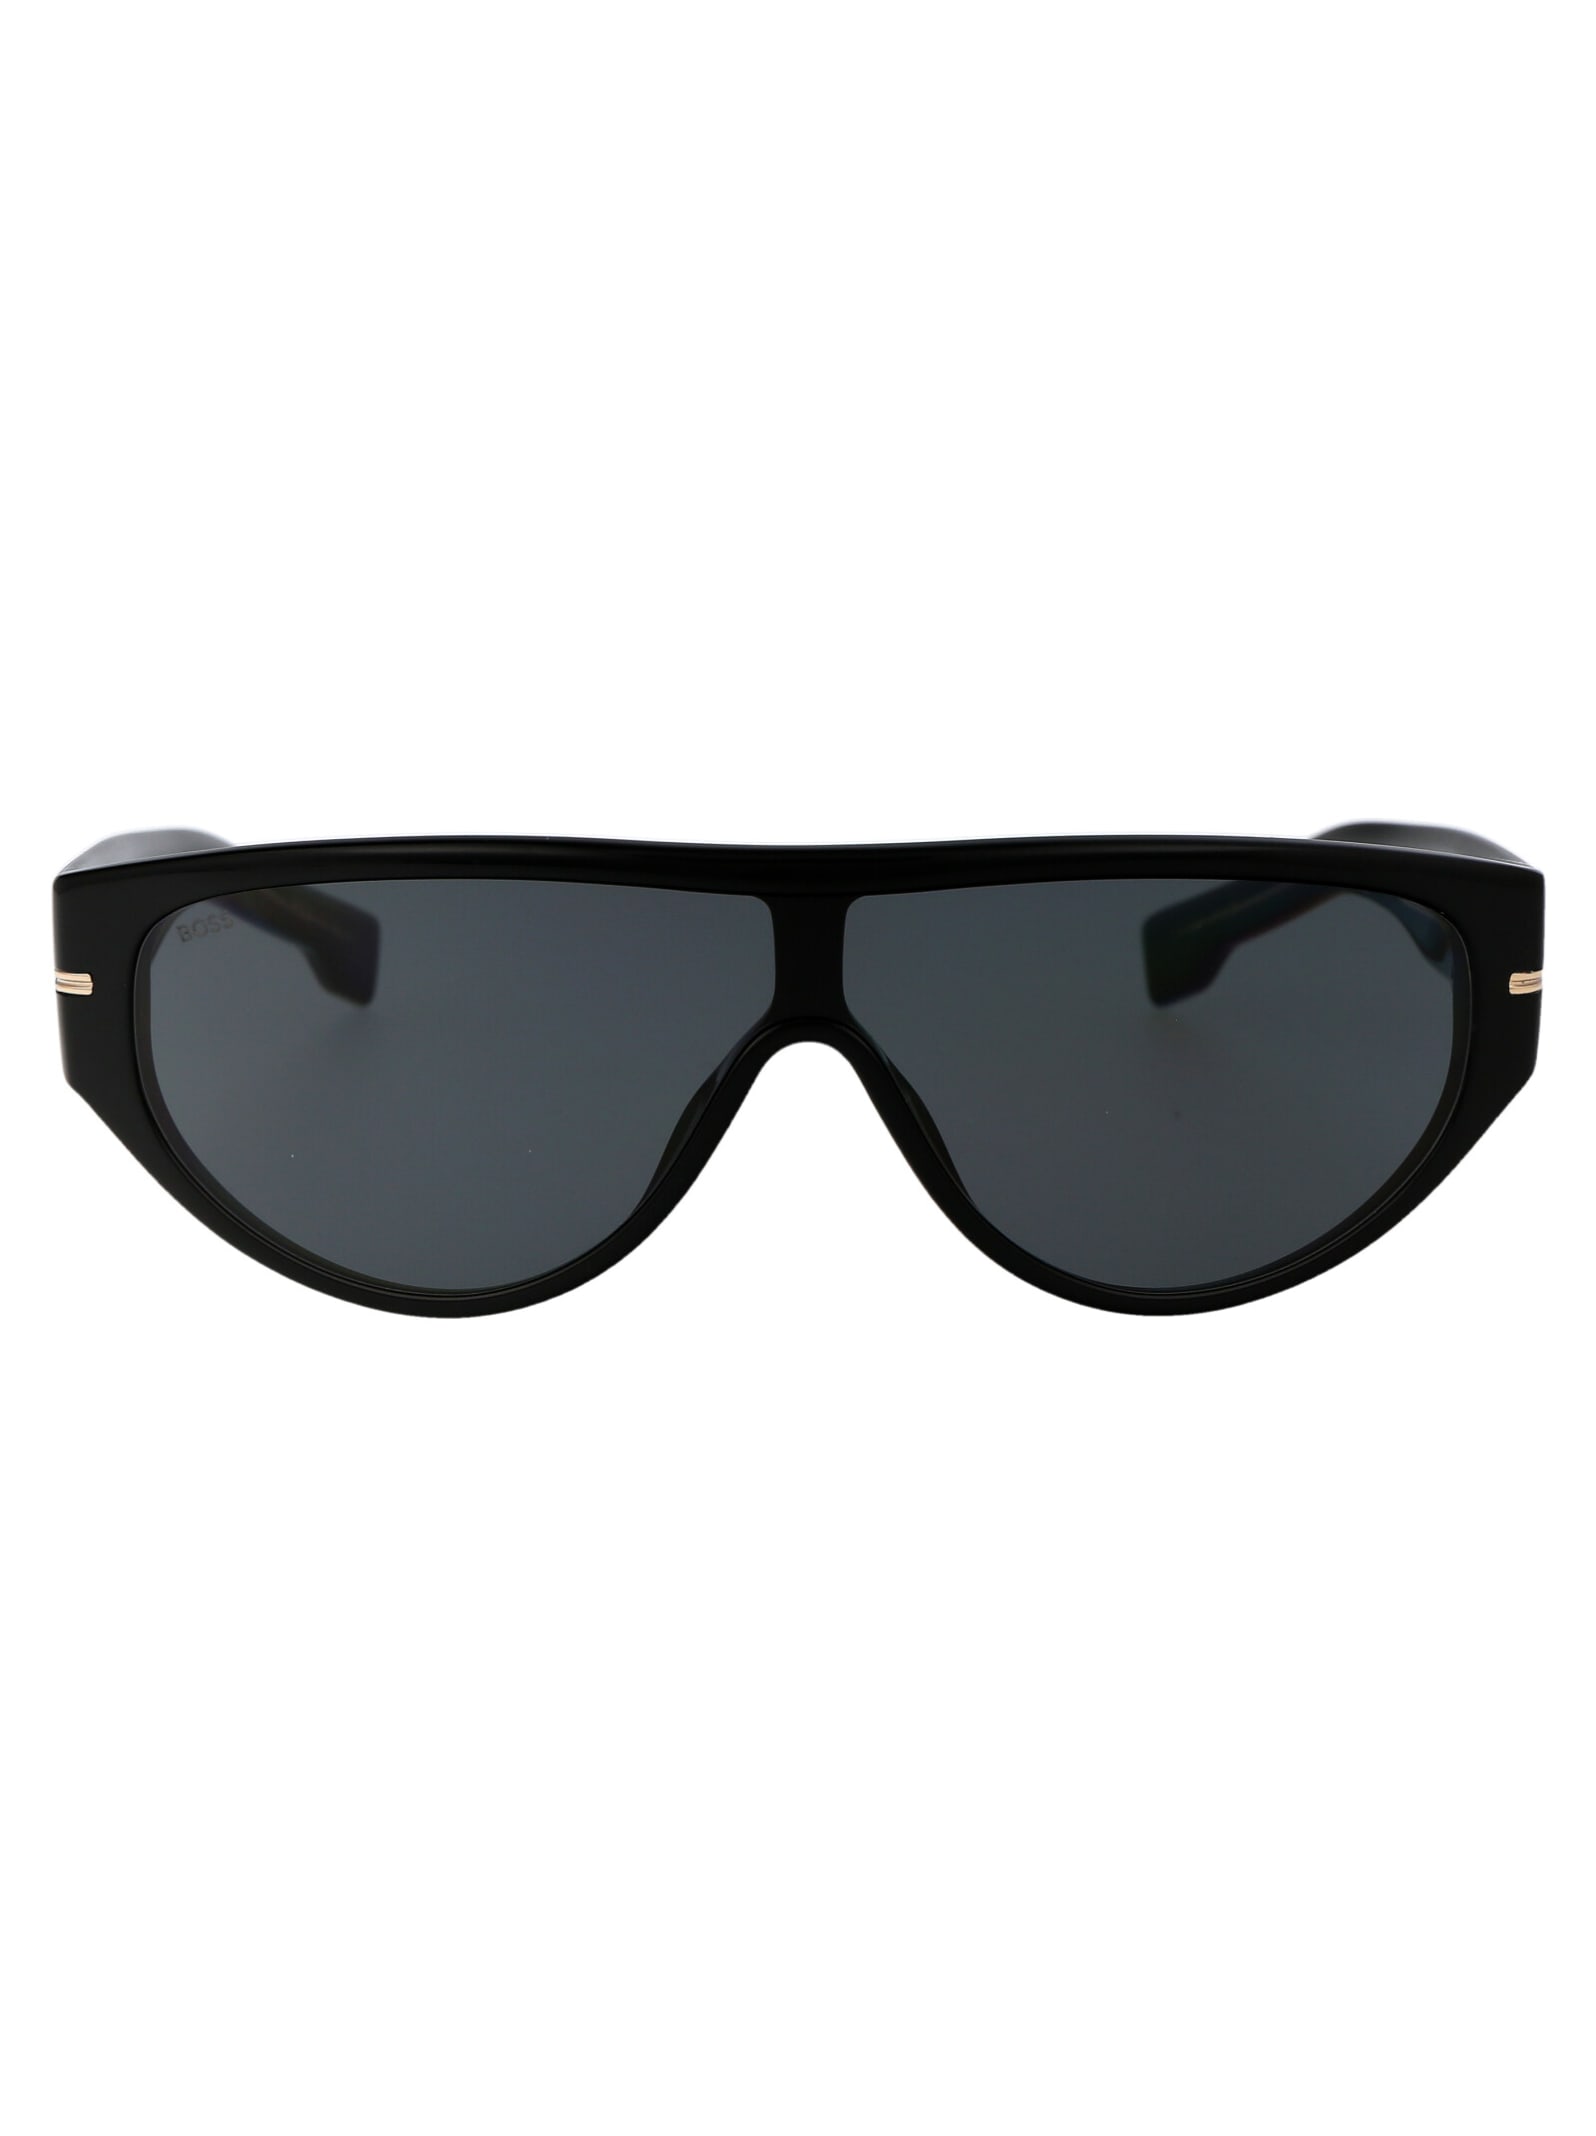 Boss 1623/s Sunglasses